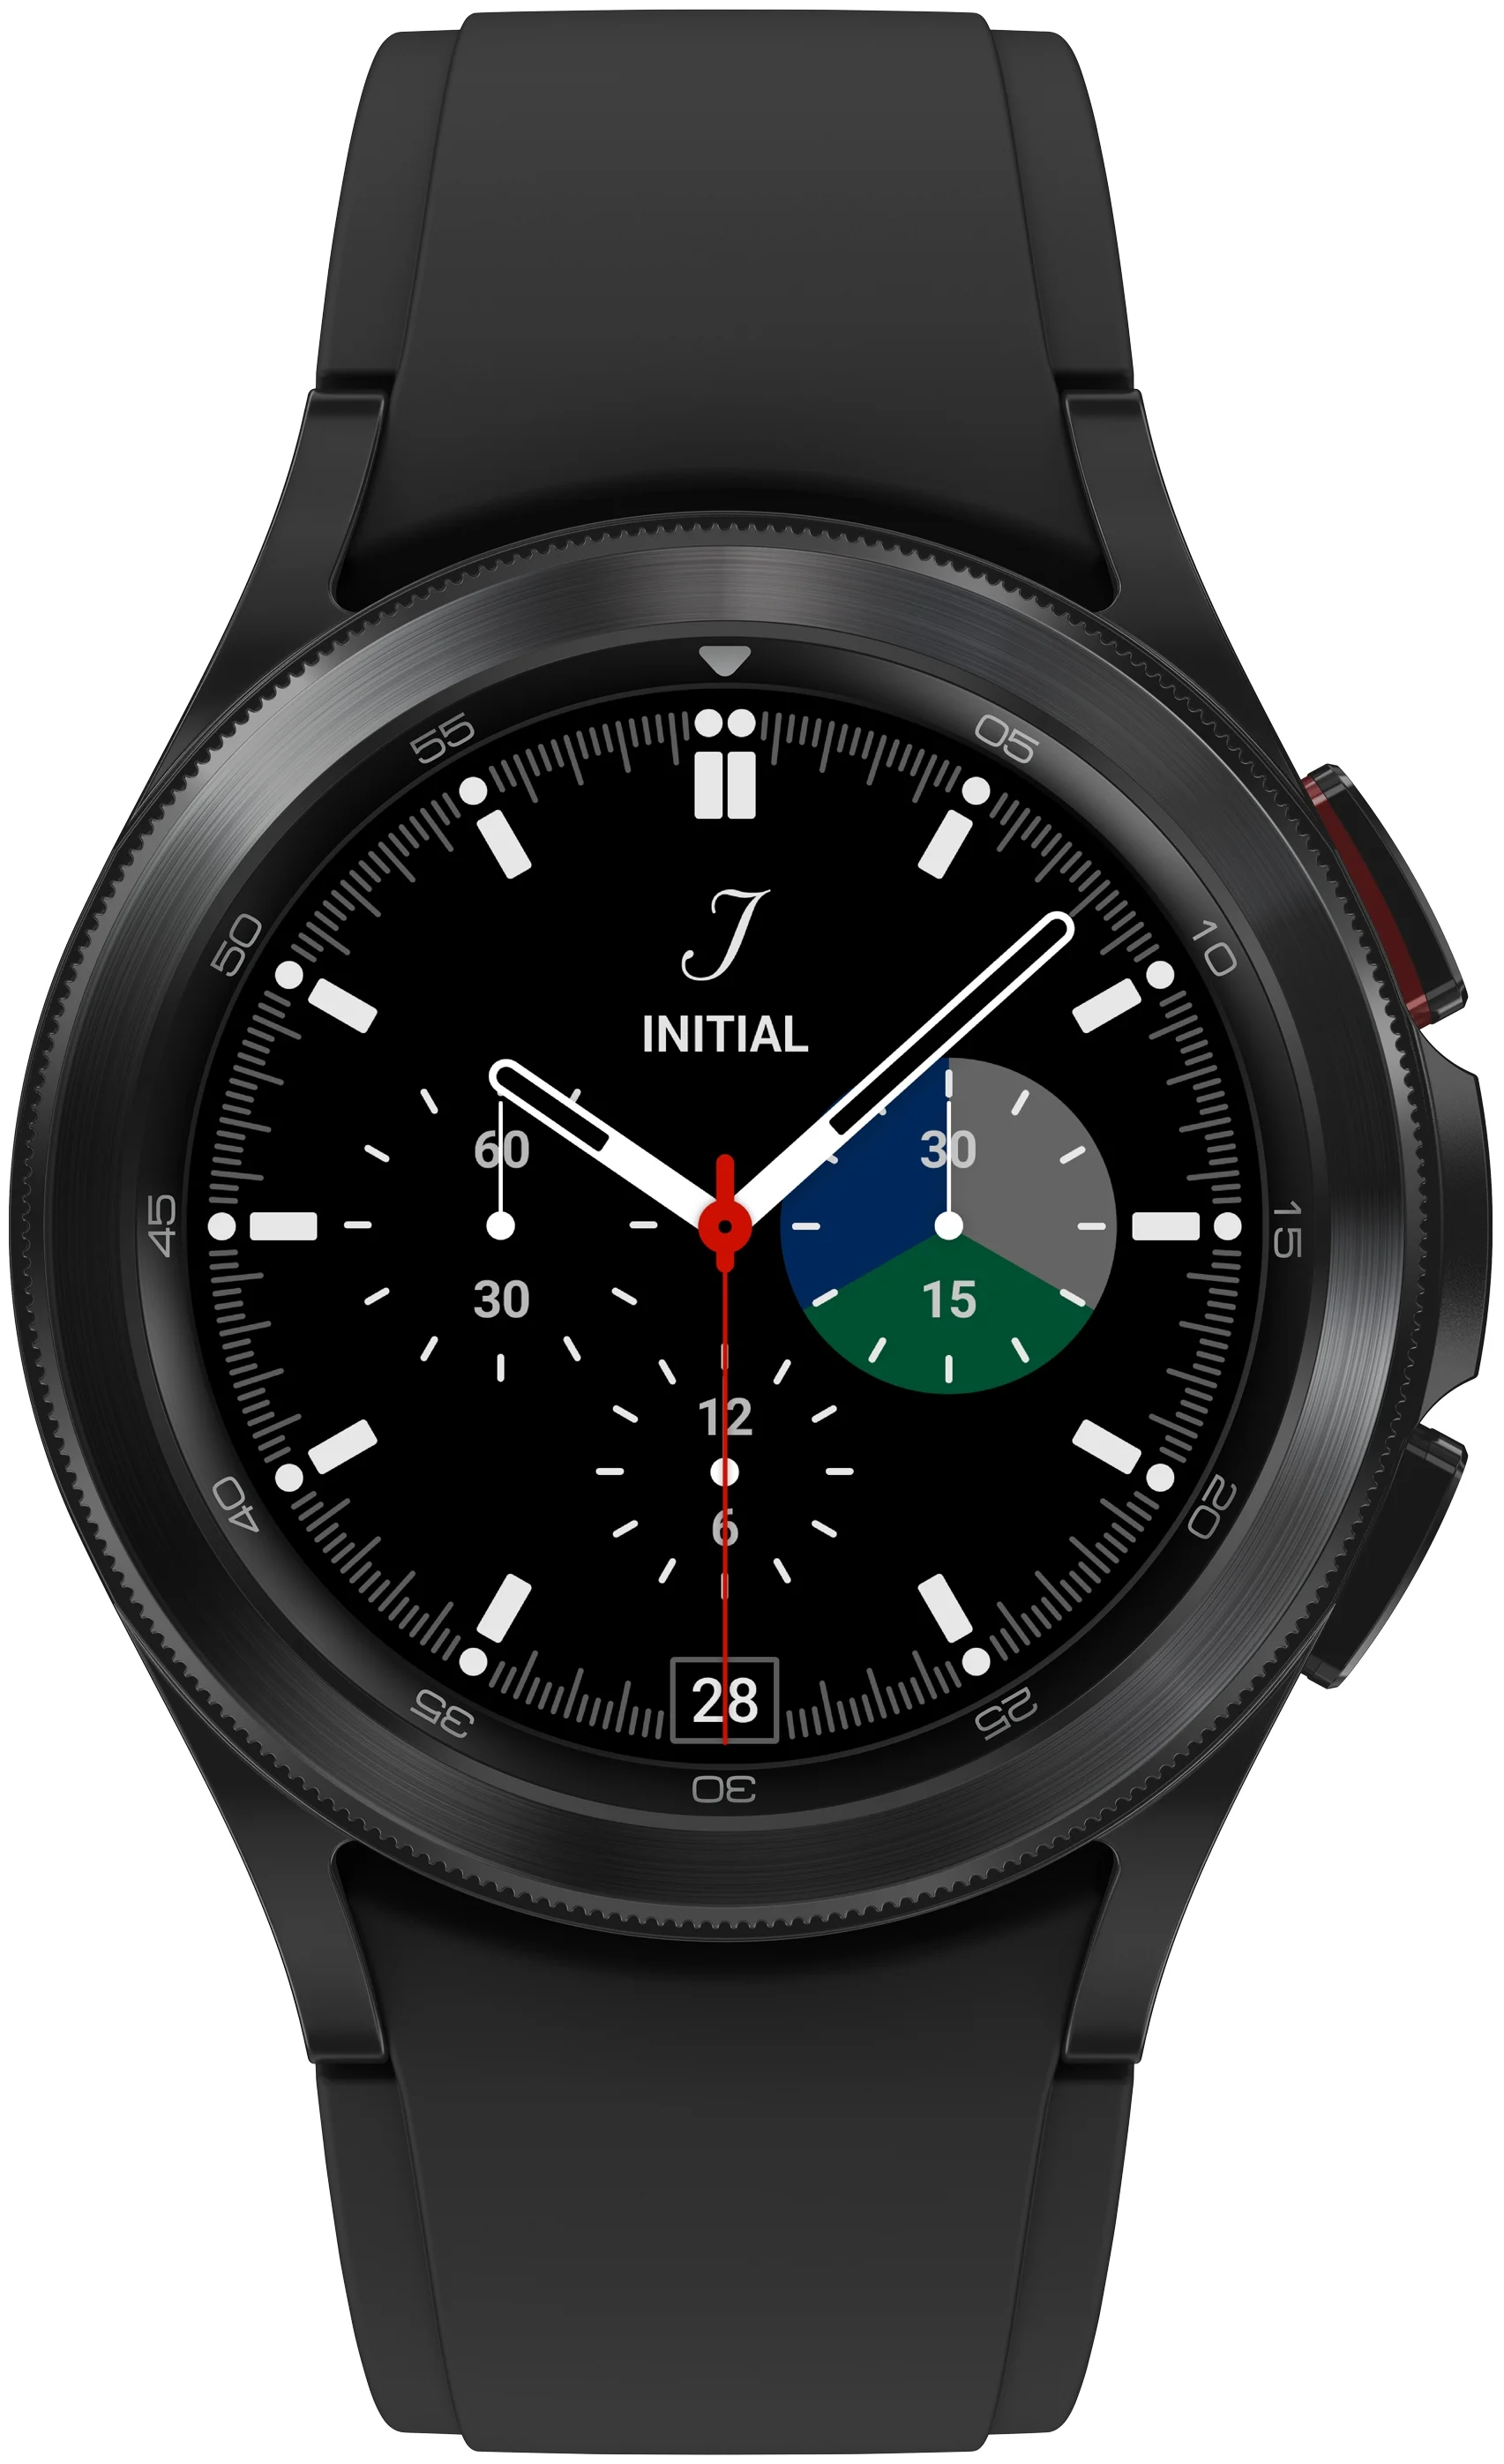 Смарт-часы Samsung Galaxy Watch 4 Classic Stainless Steel, 42 мм, черный